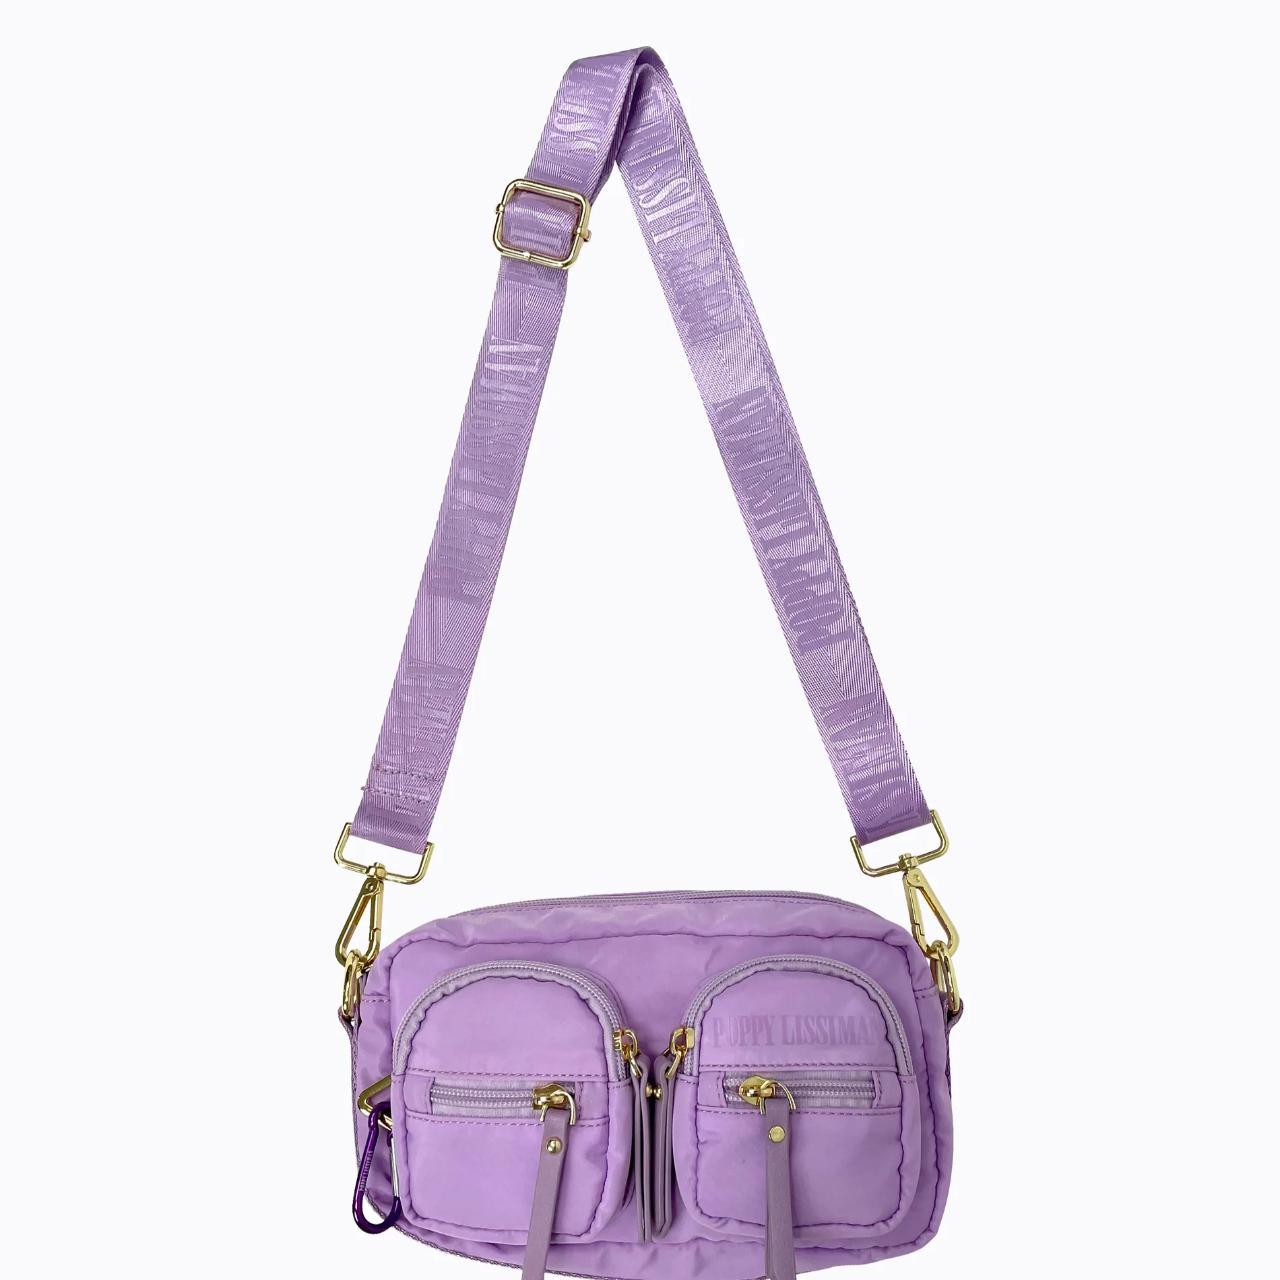 Poppy Lissiman Purple Bag Used 3-4 Times No... - Depop